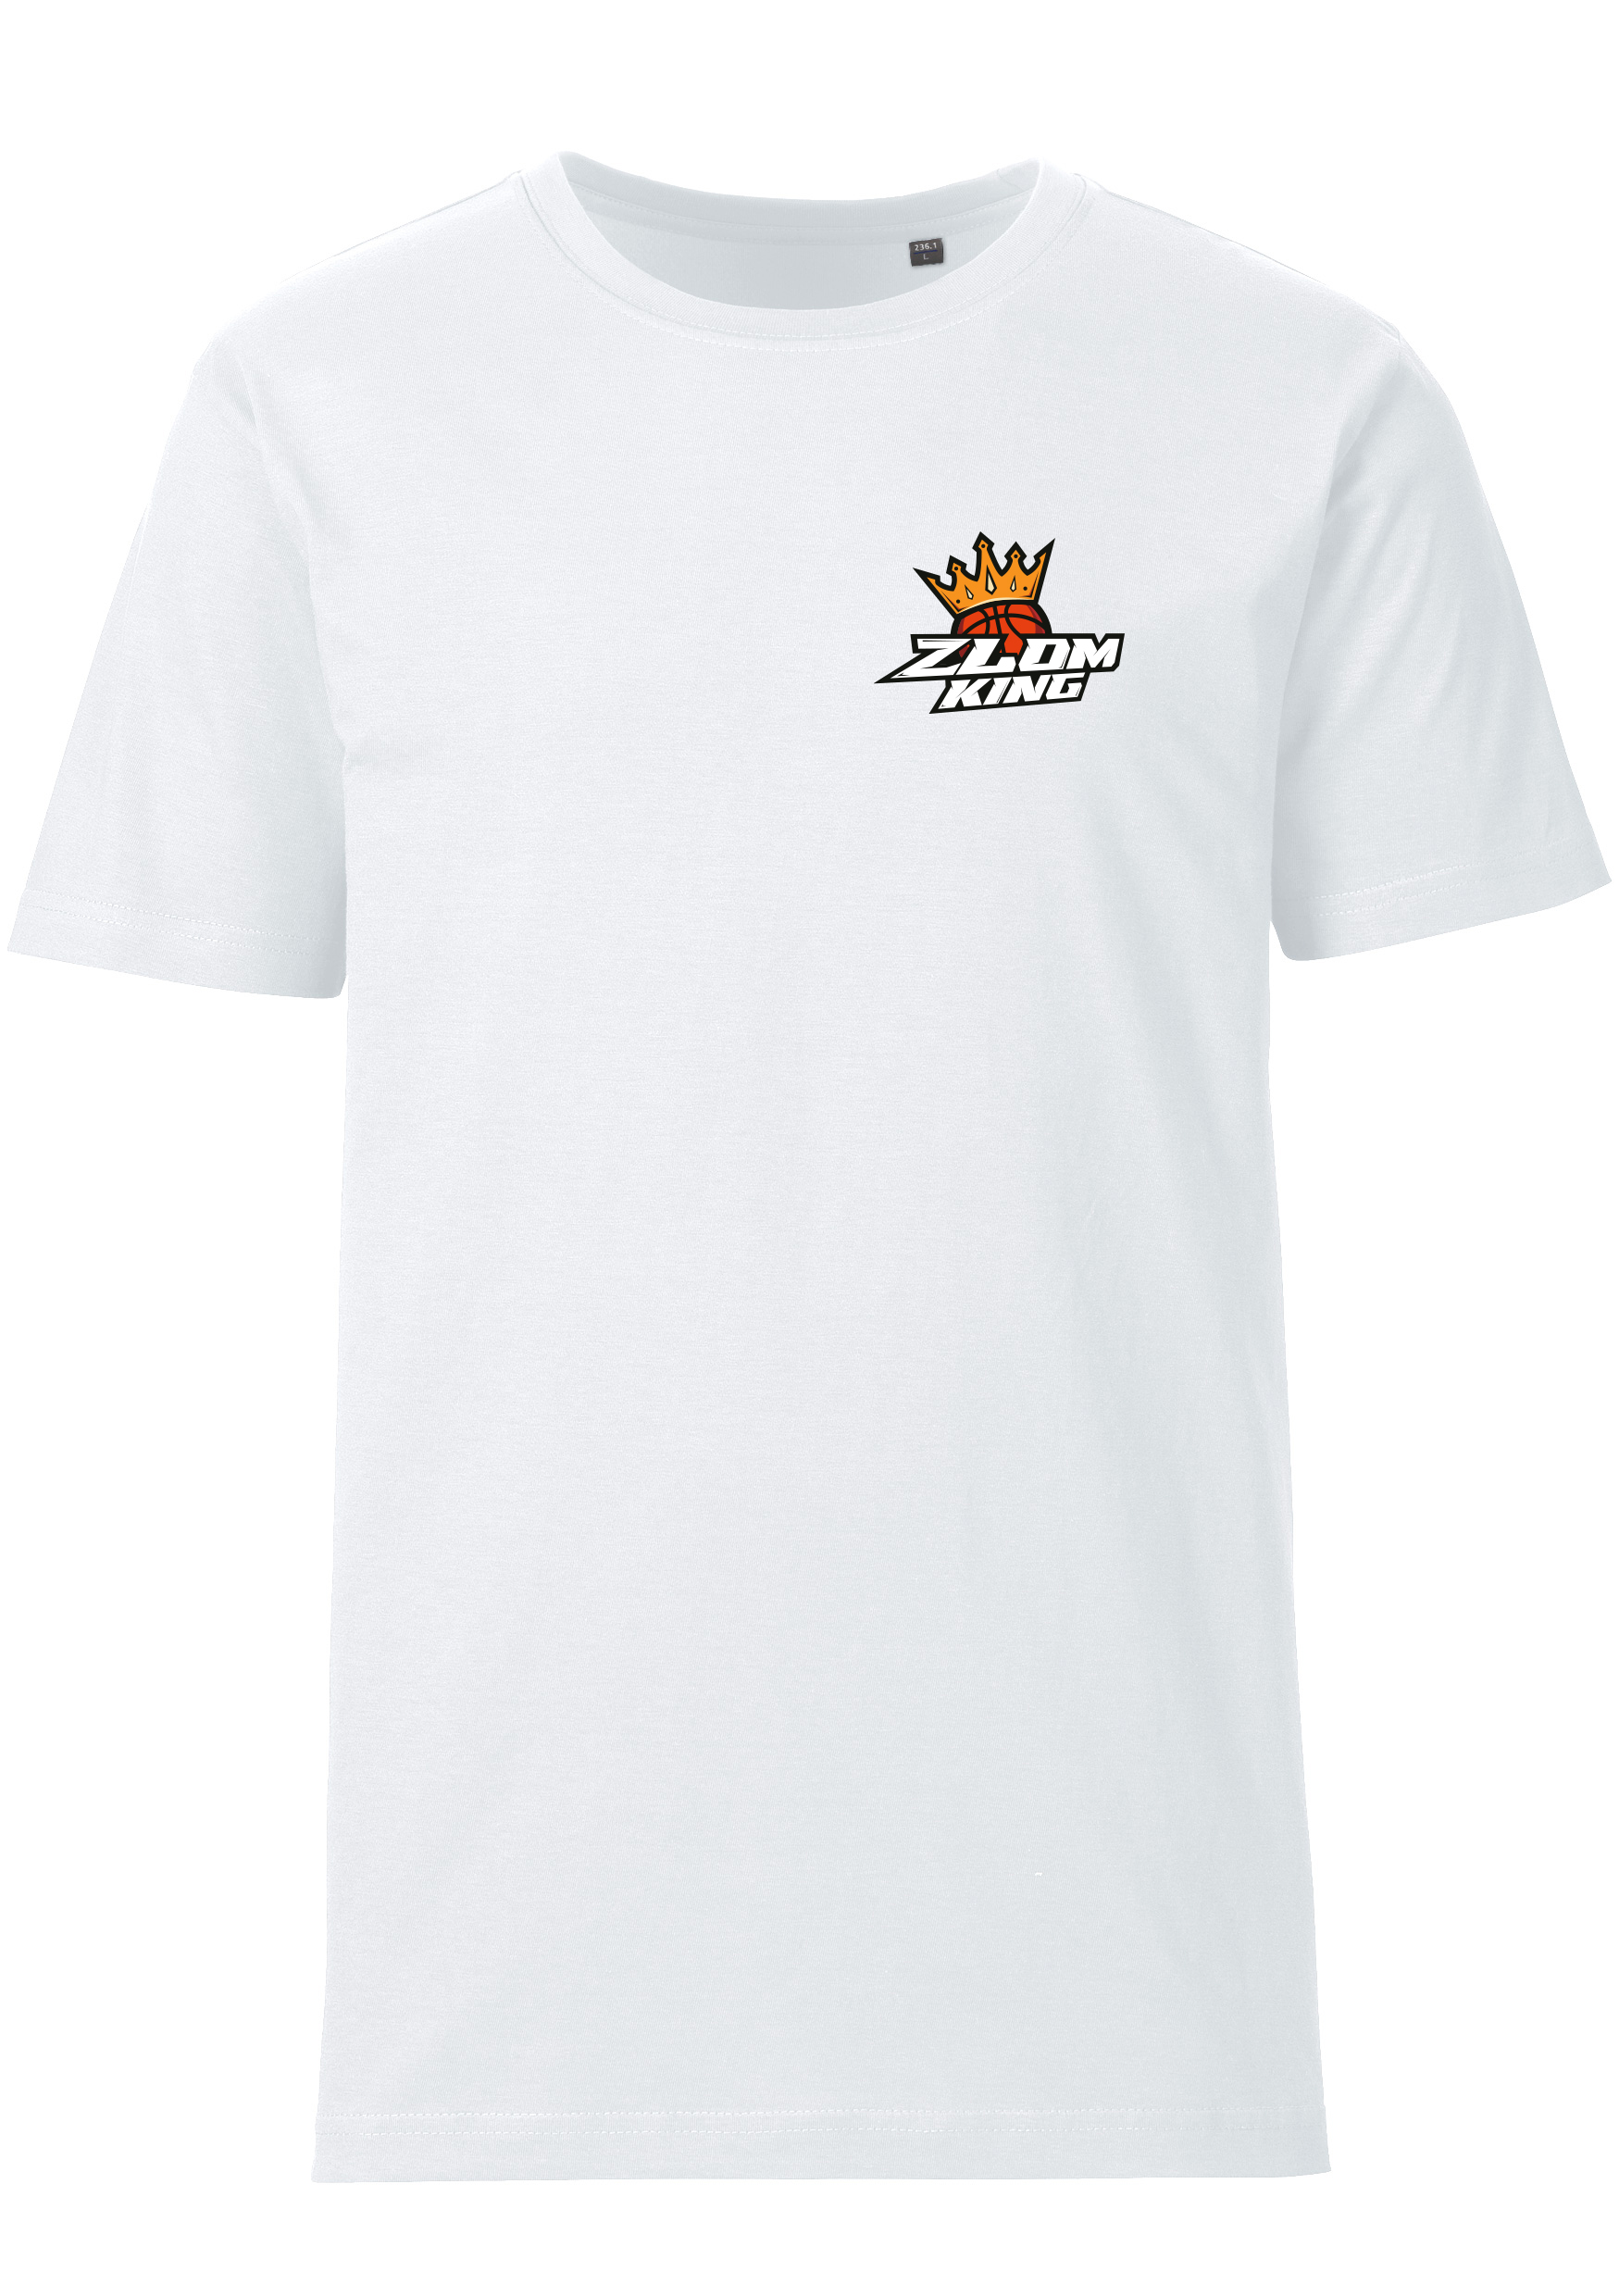 Zlomking T-Shirt Logo klein